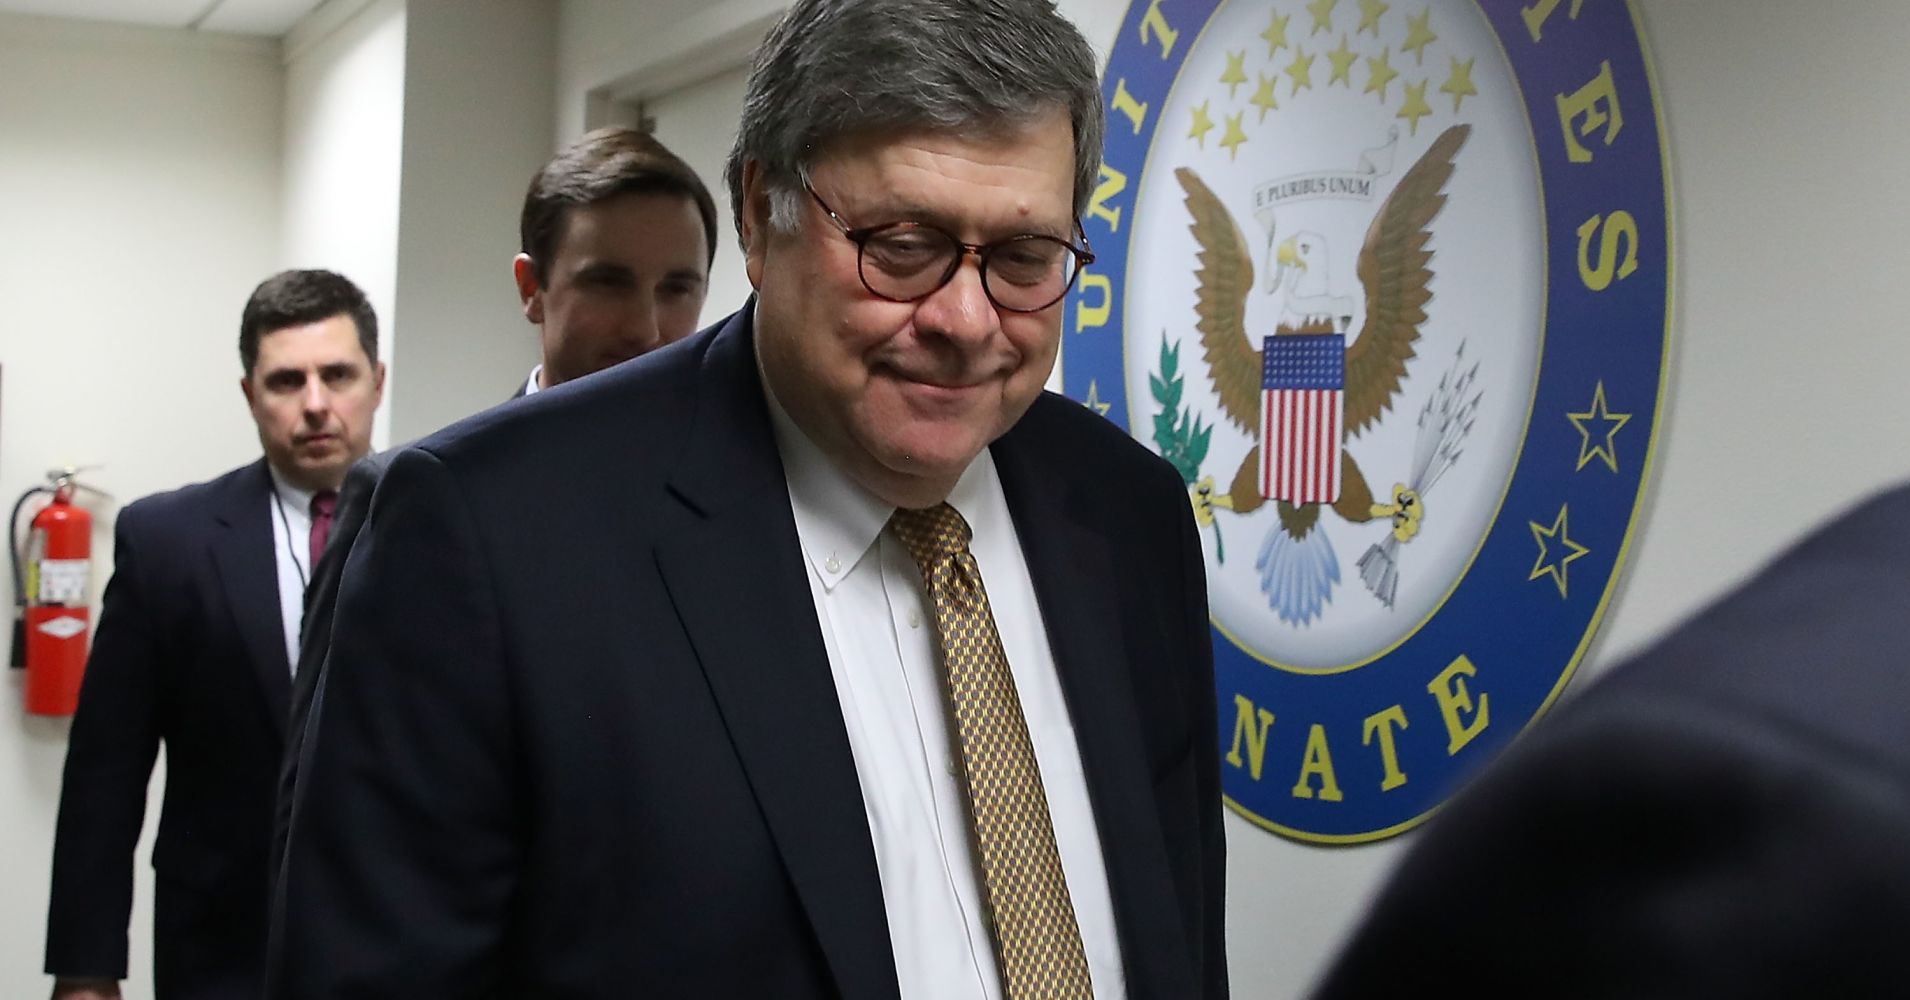 Senate confirms Trump's AG pick William Barr, who will oversee Mueller probe